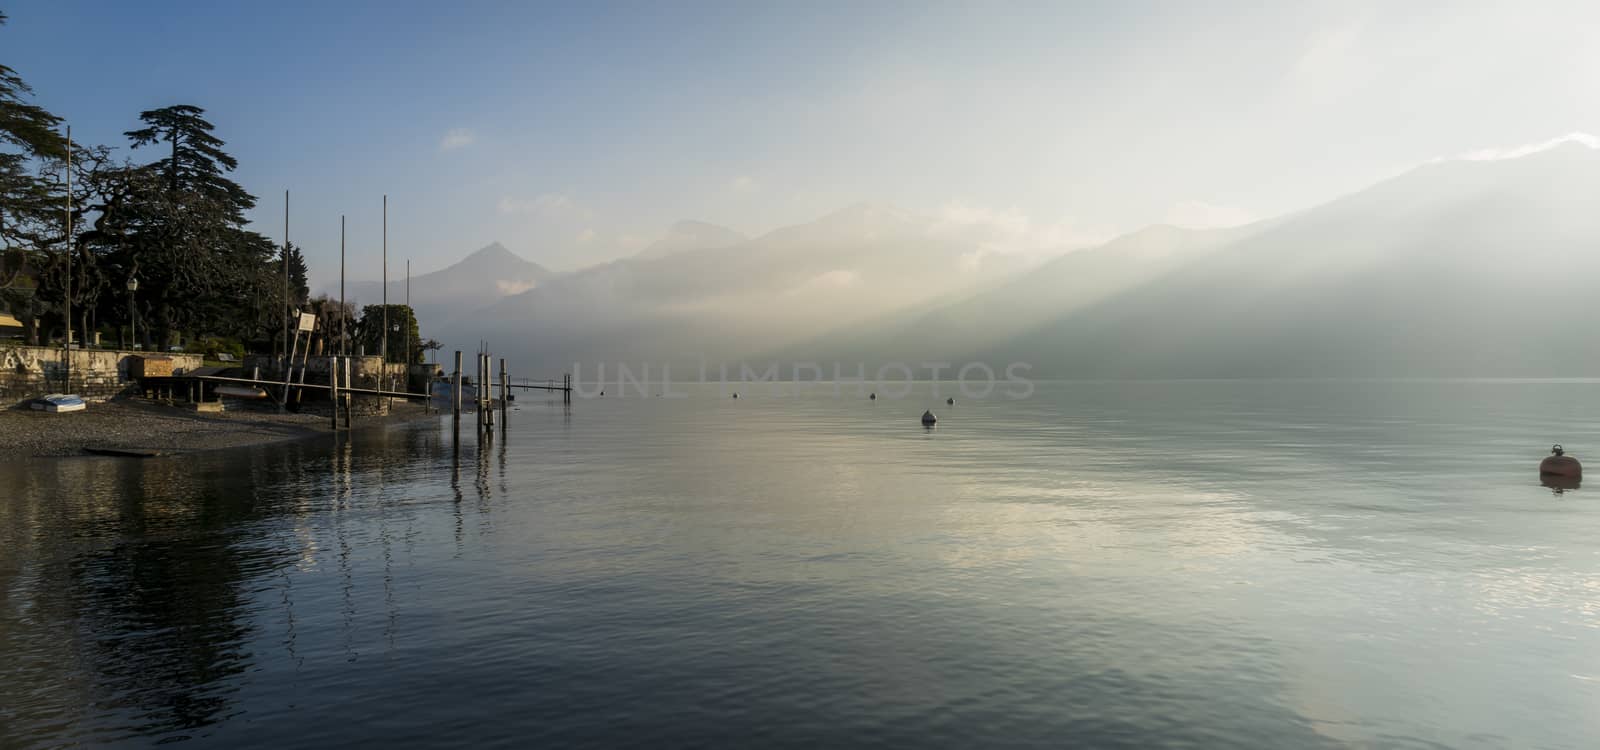 Foggy morning in Mennagio, Lake Como, Italy.